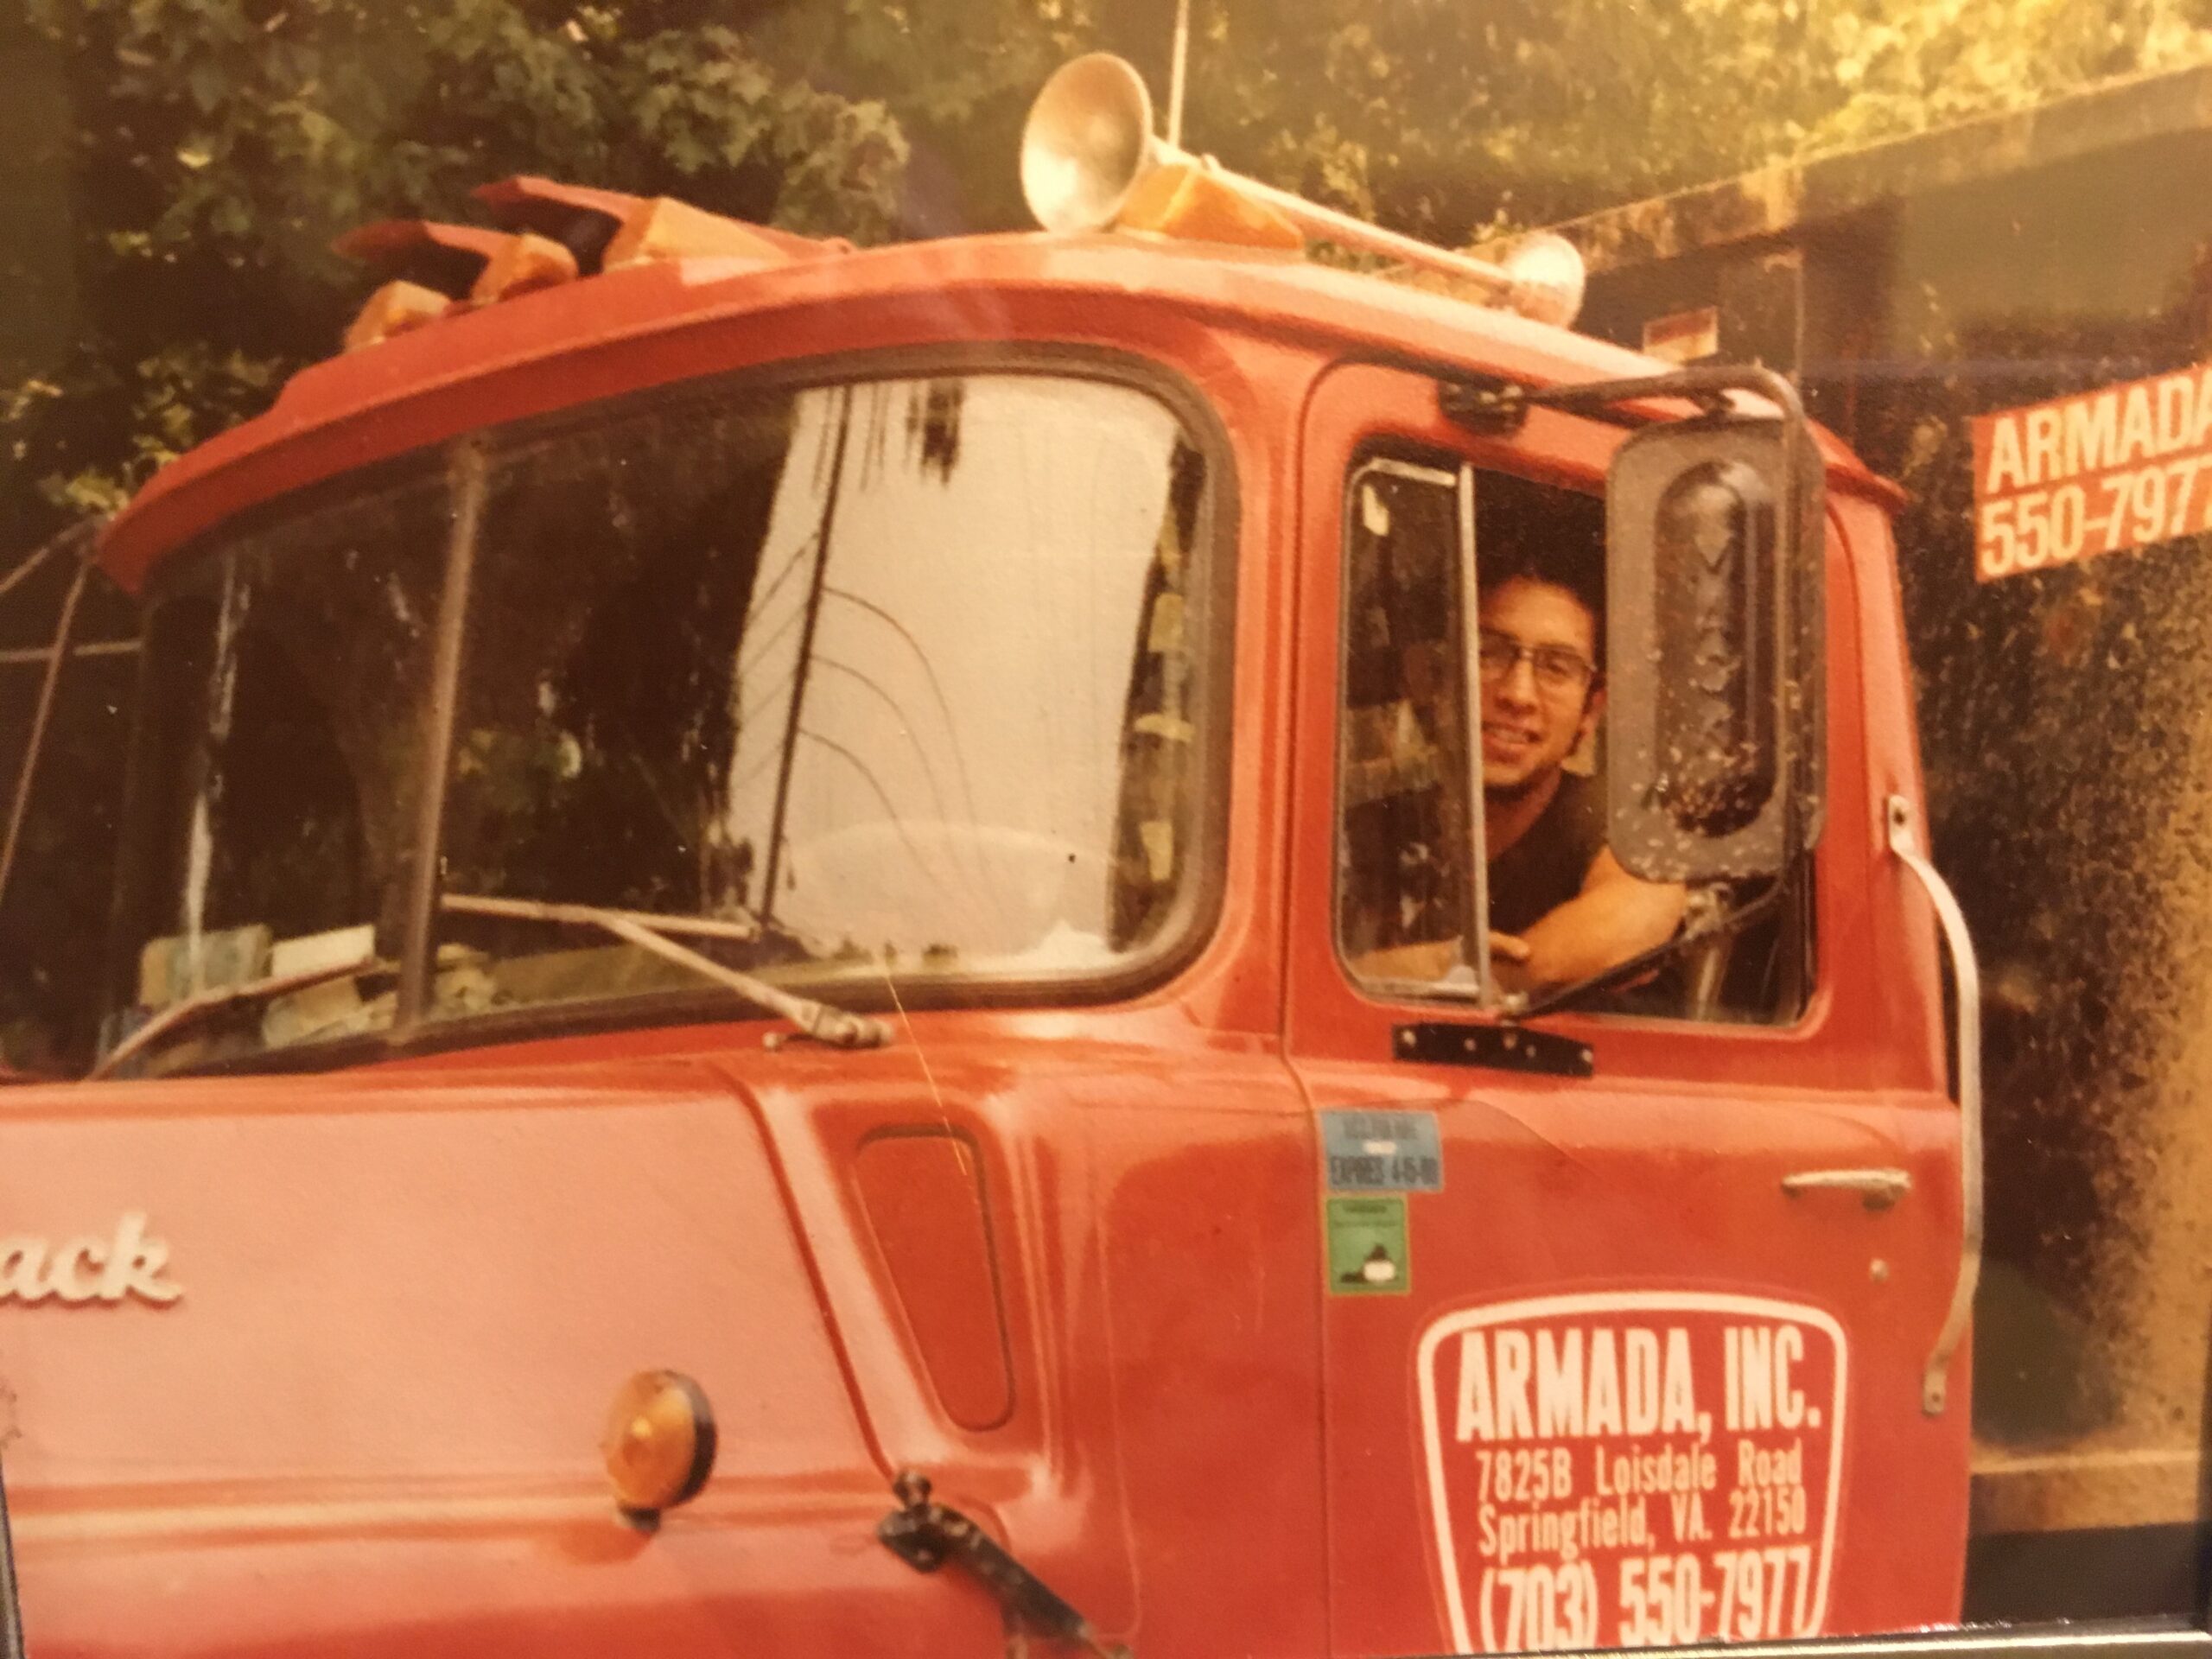 Chancellor Garcia driving a red truck